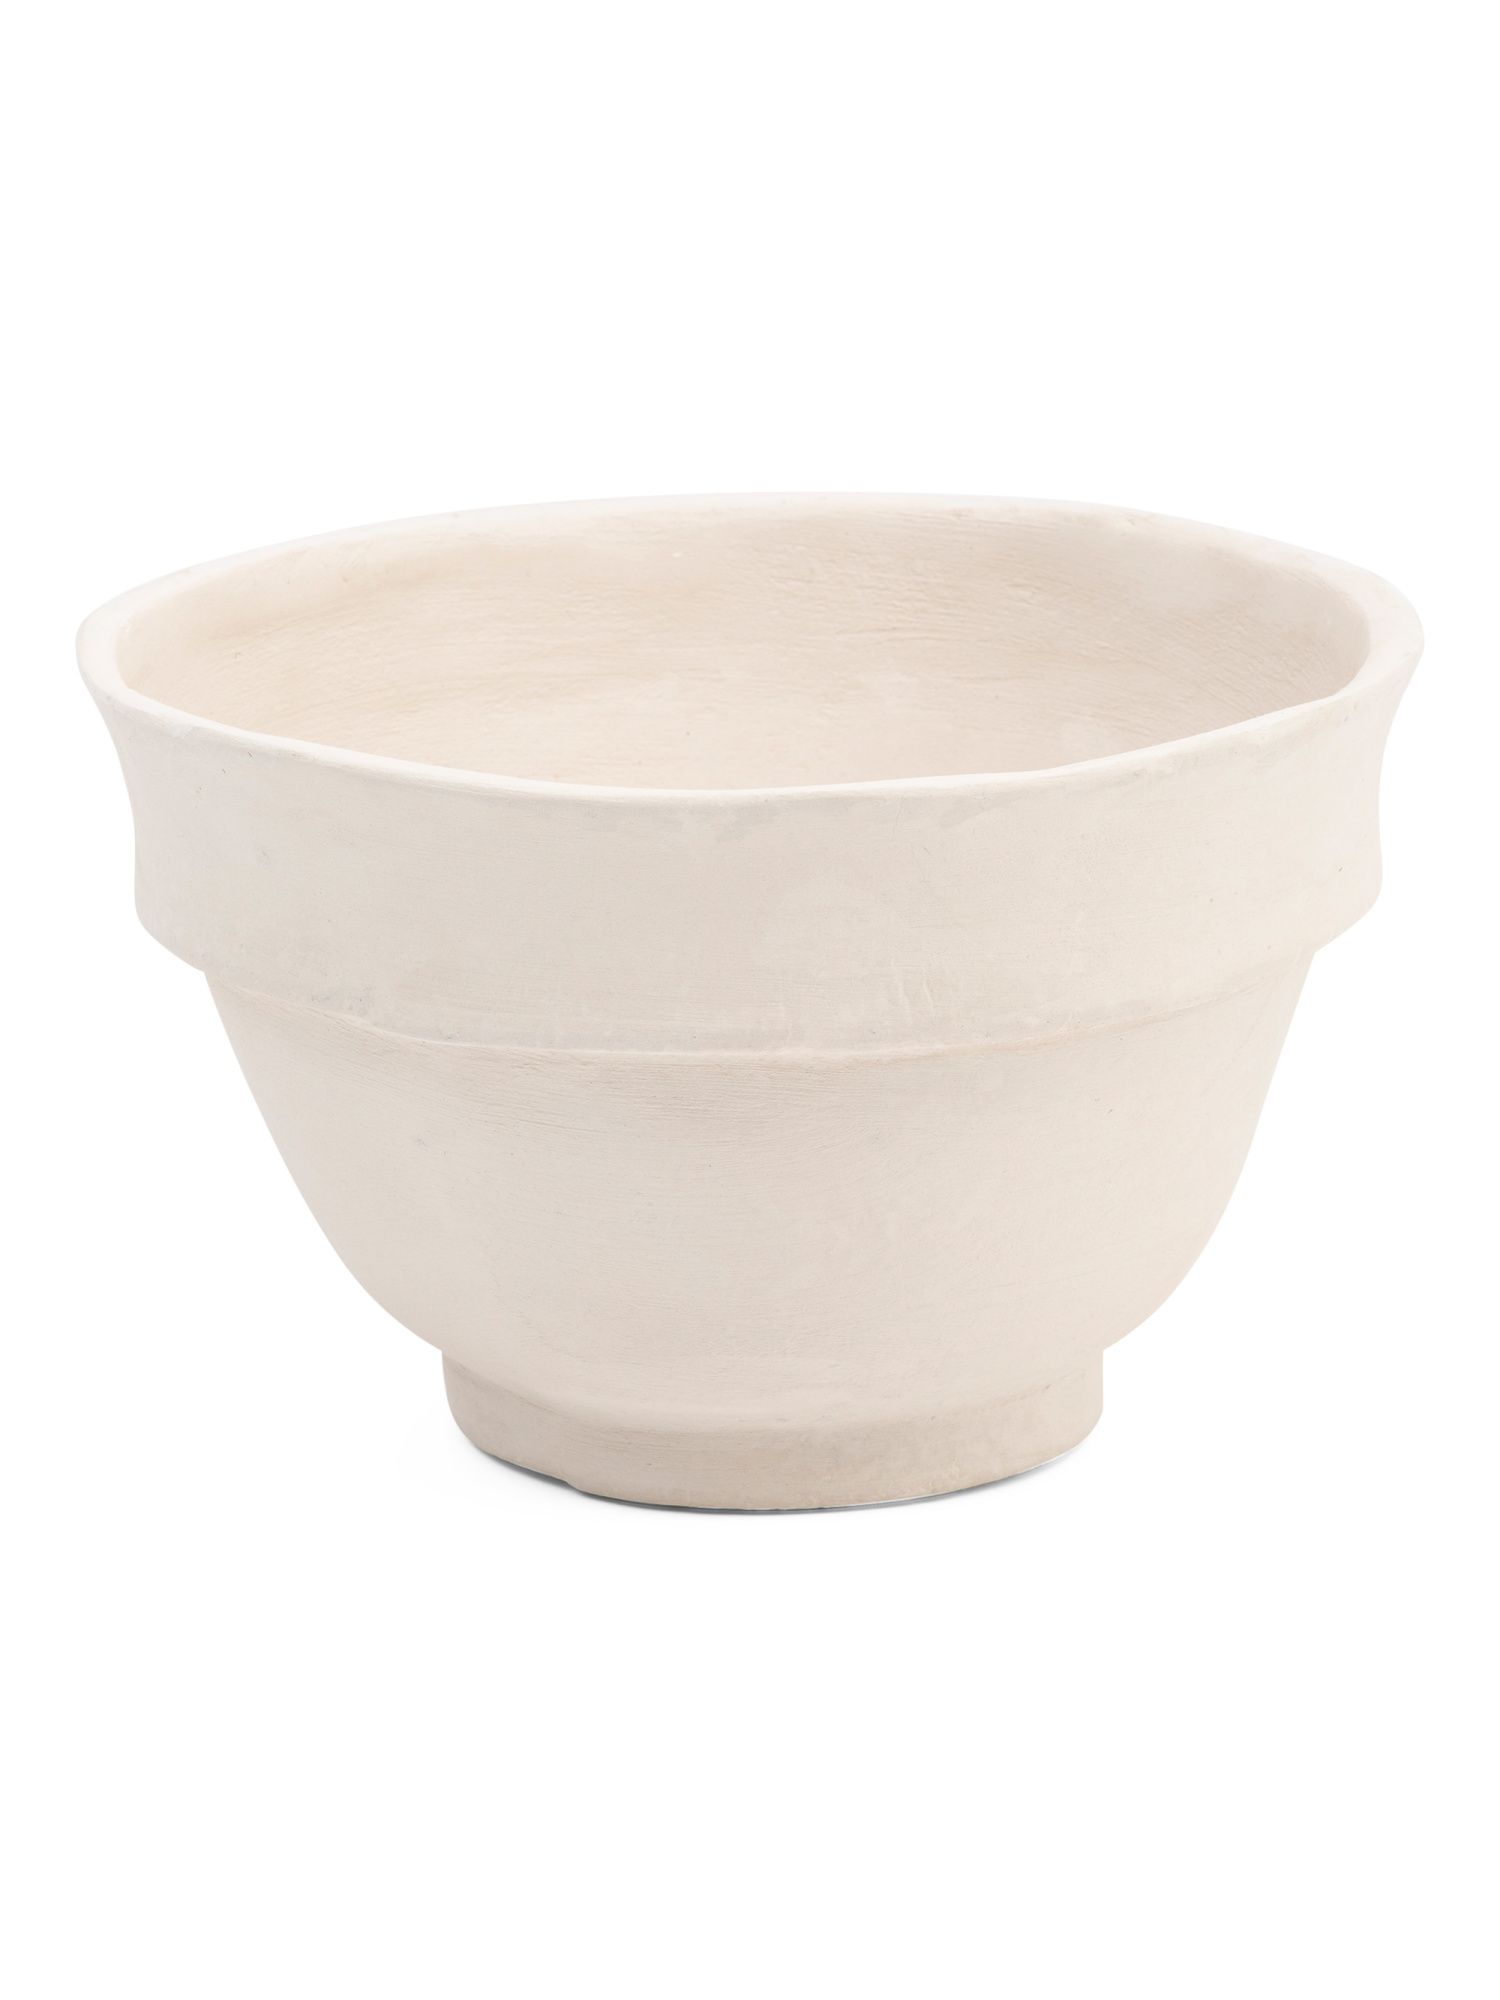 10in Lipped Decorative Bowl | TJ Maxx